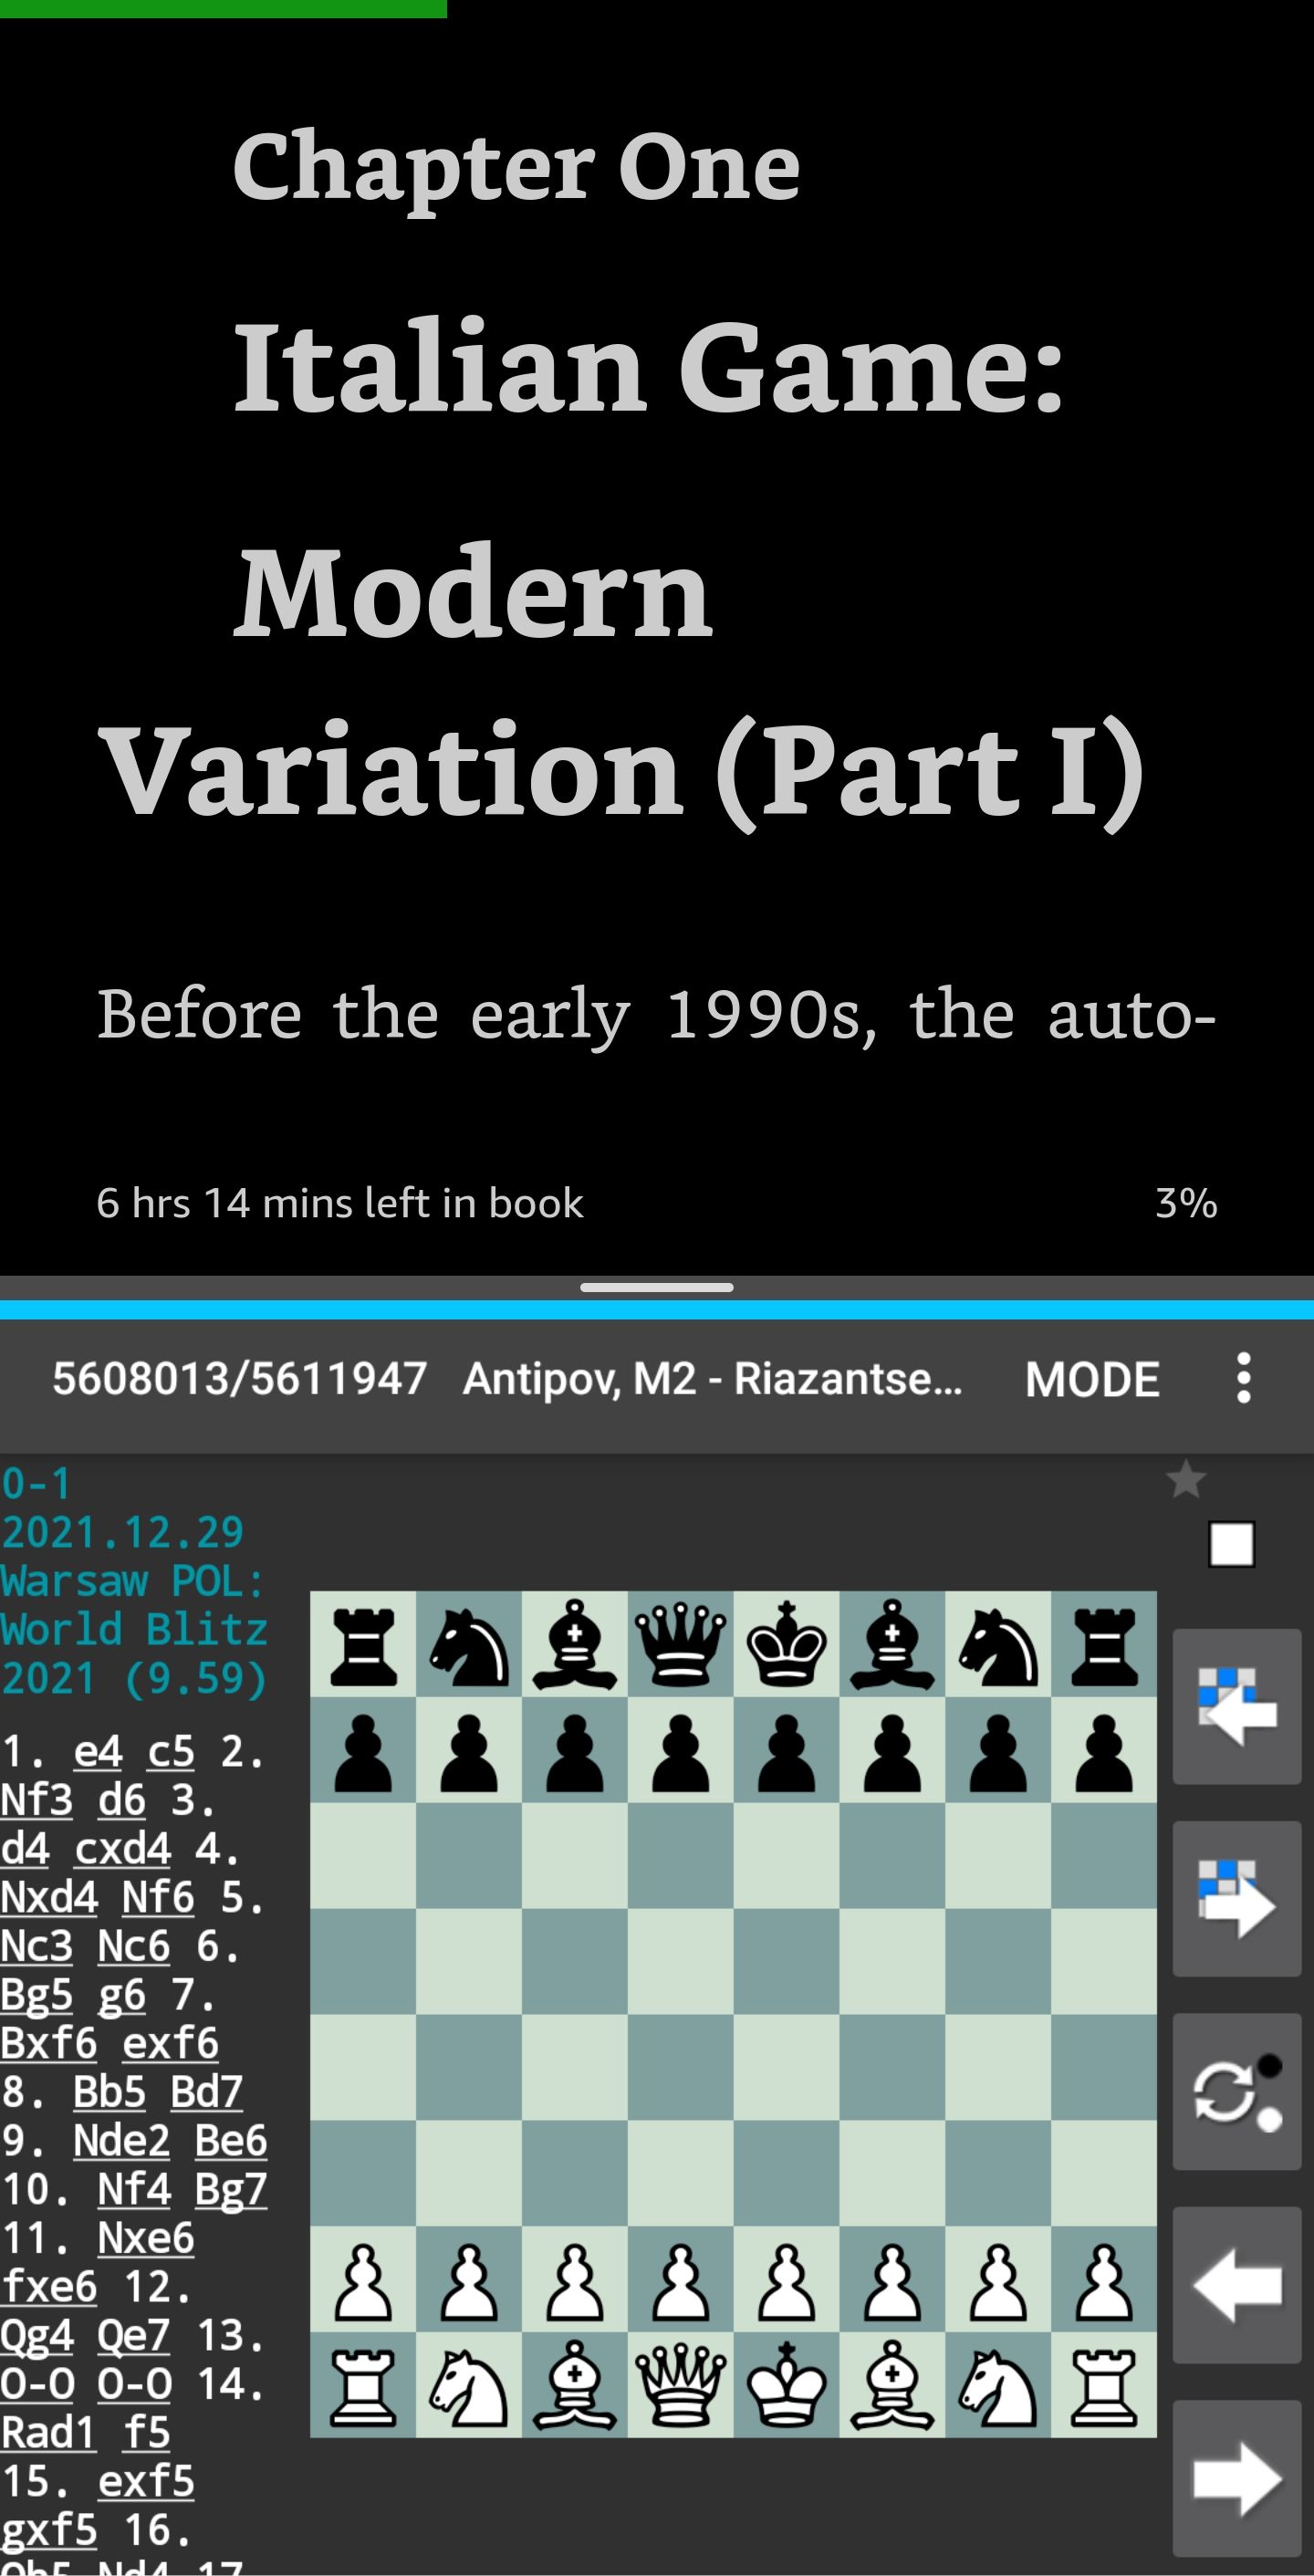 ChessBase 11 - Chess Database Software, Store, Analyze Games, Books, etc